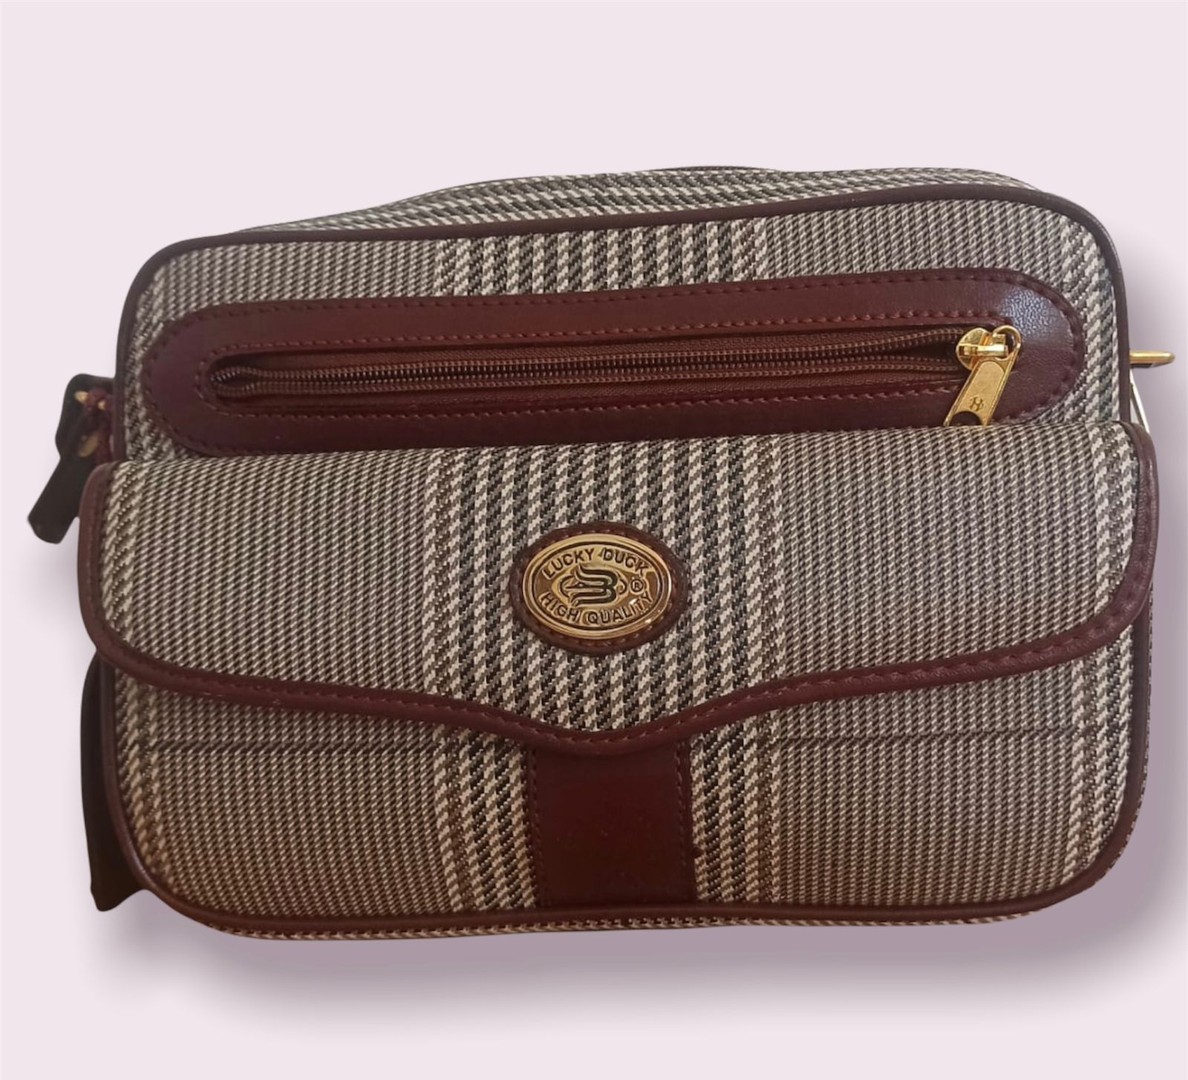 carteras y maletas - Cartera Lucky Duck en leather / cuero. Bolso de hombro - Vintage - Bolso marrón.